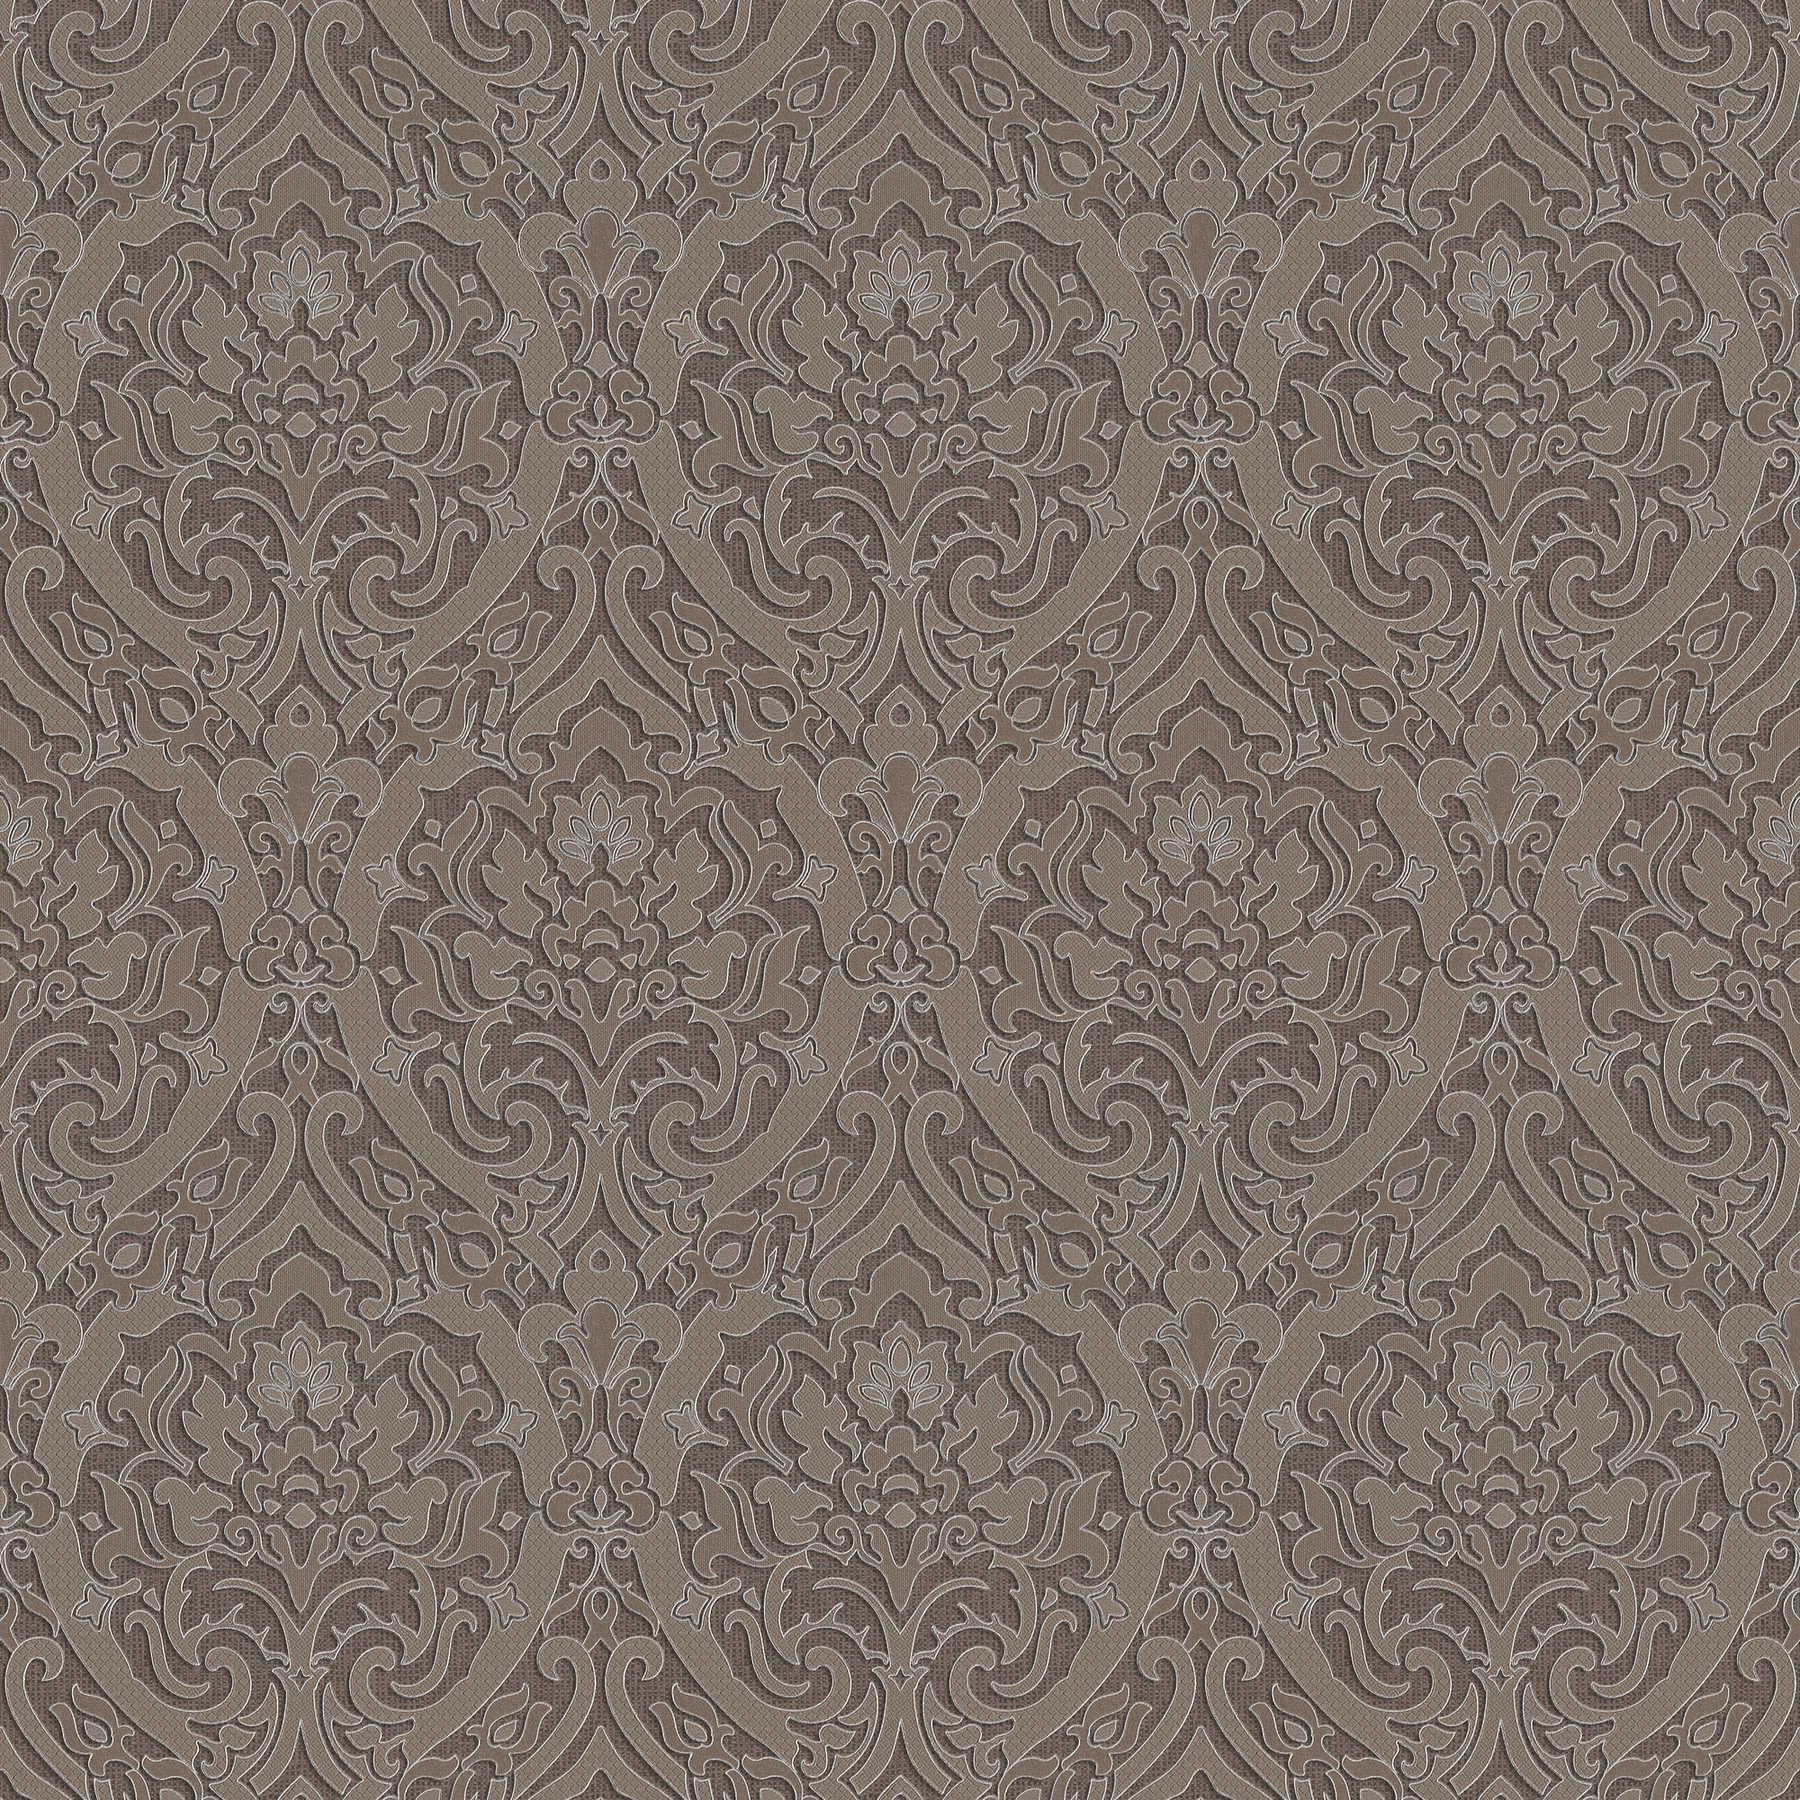 Ornament wallpaper with 3D design & texture pattern - Brown, Metallic
